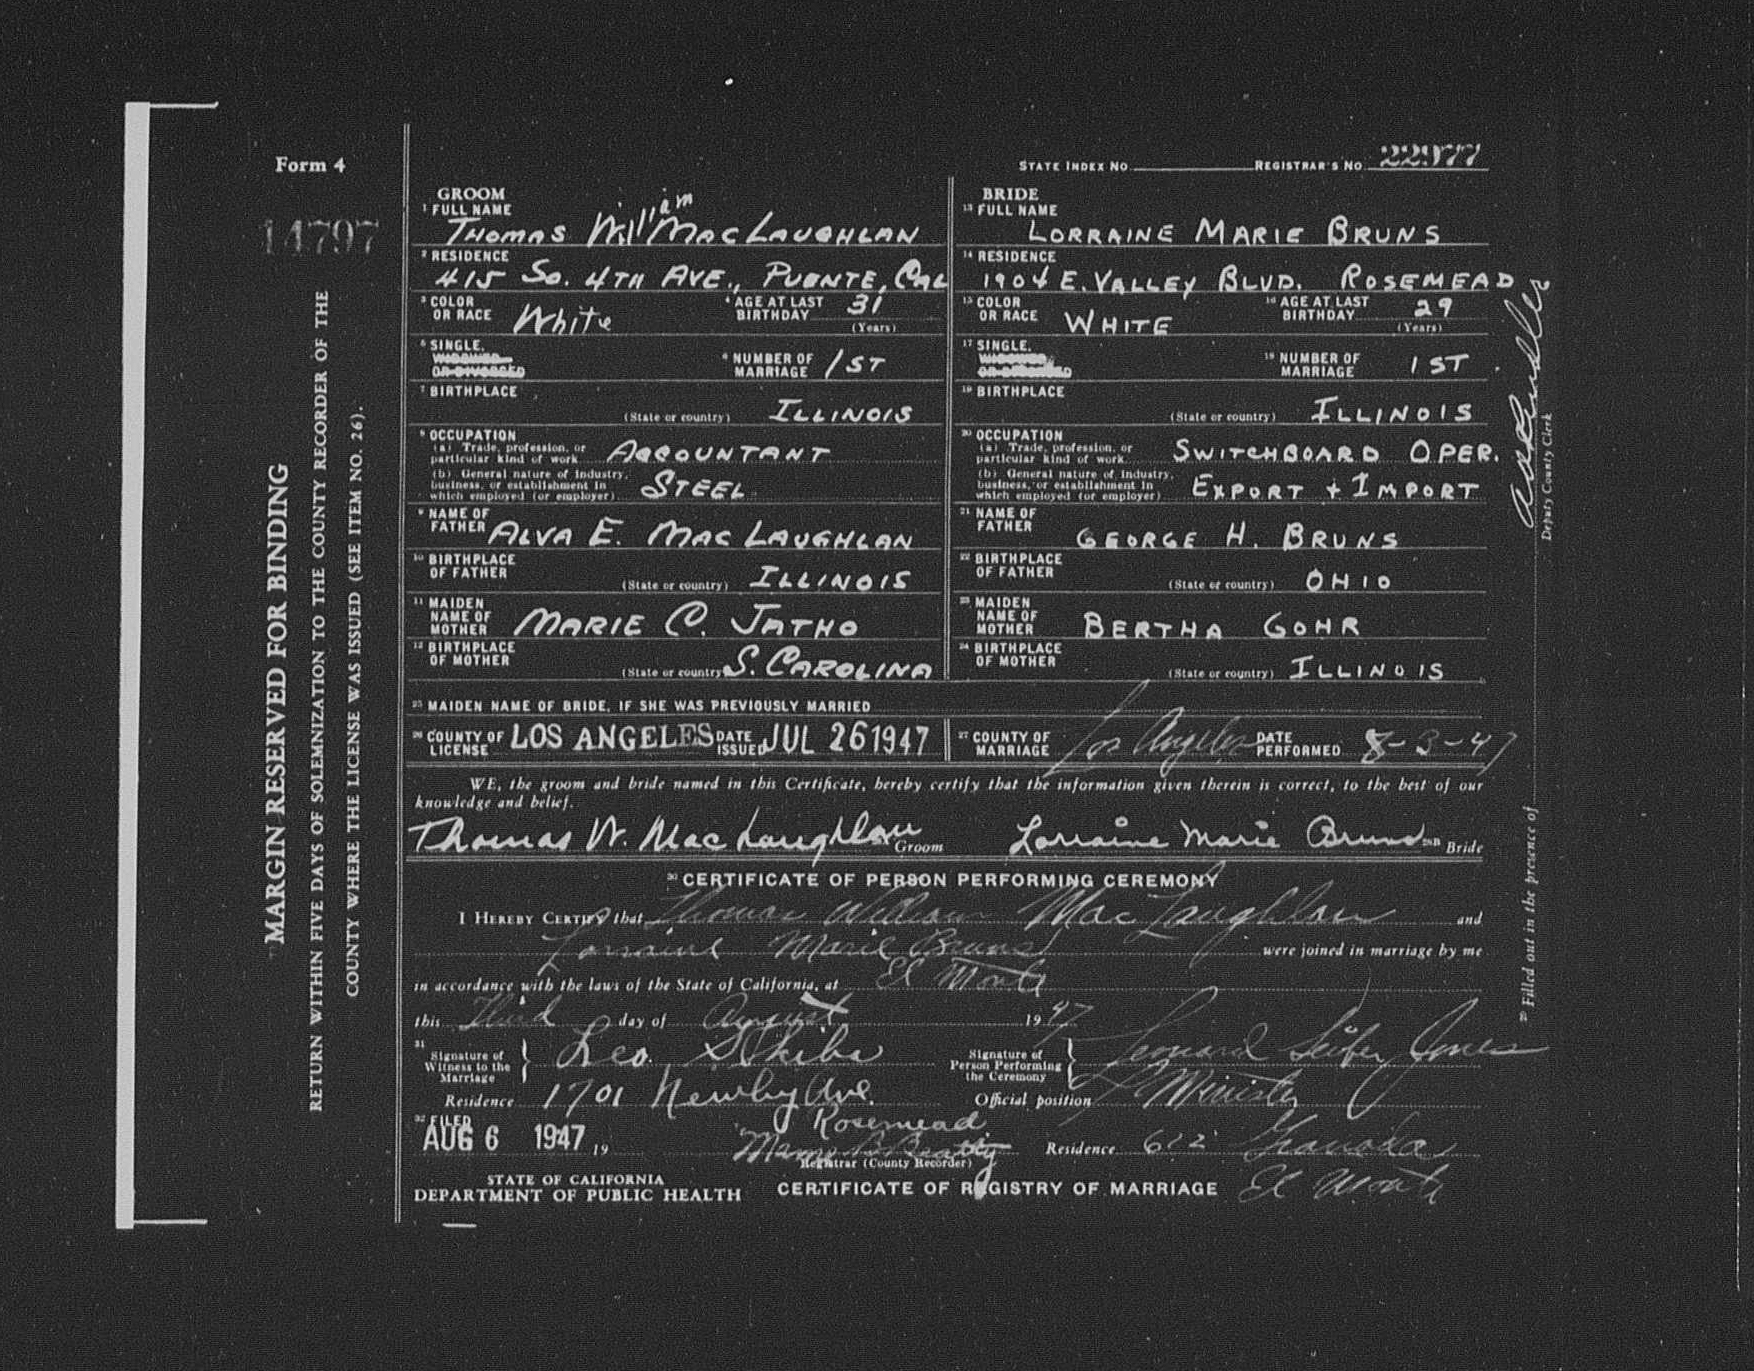 MacLaughlan-Bruns marriage license